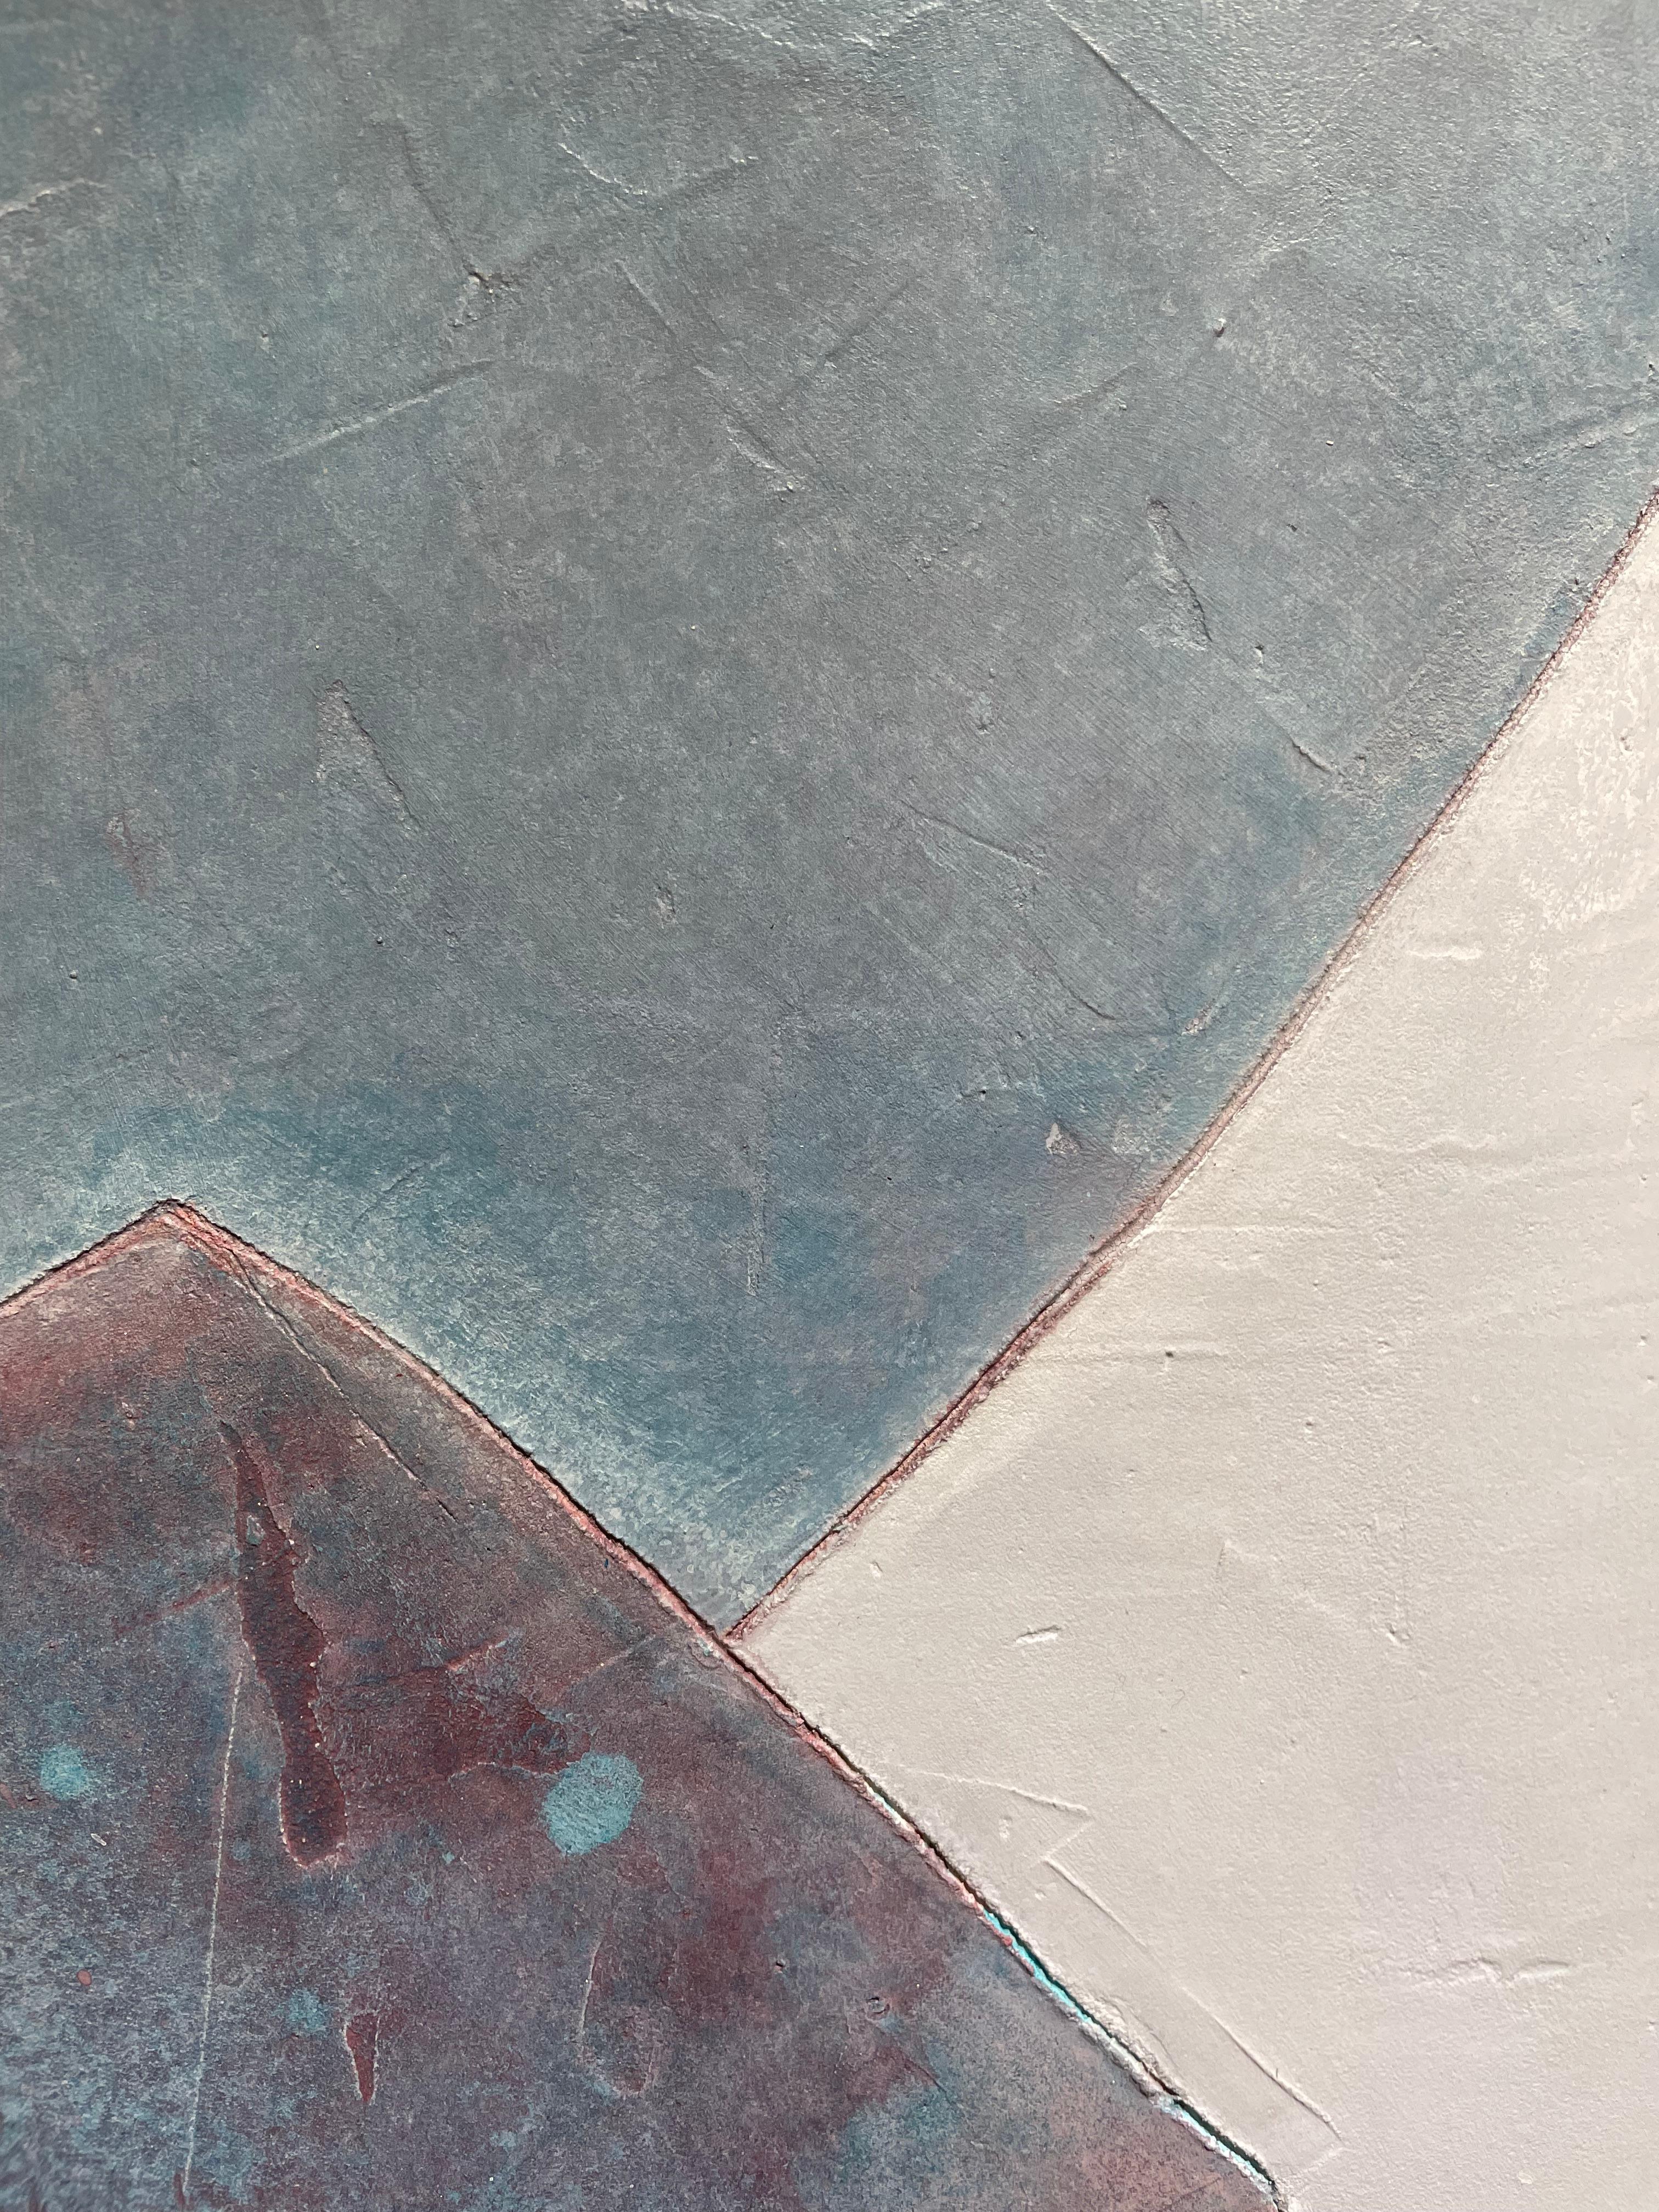 Aigua Viva - 21st Century, Abstract Art, Cement on Wood, Earth Tones - Abstract Geometric Painting by Núria Guinovart